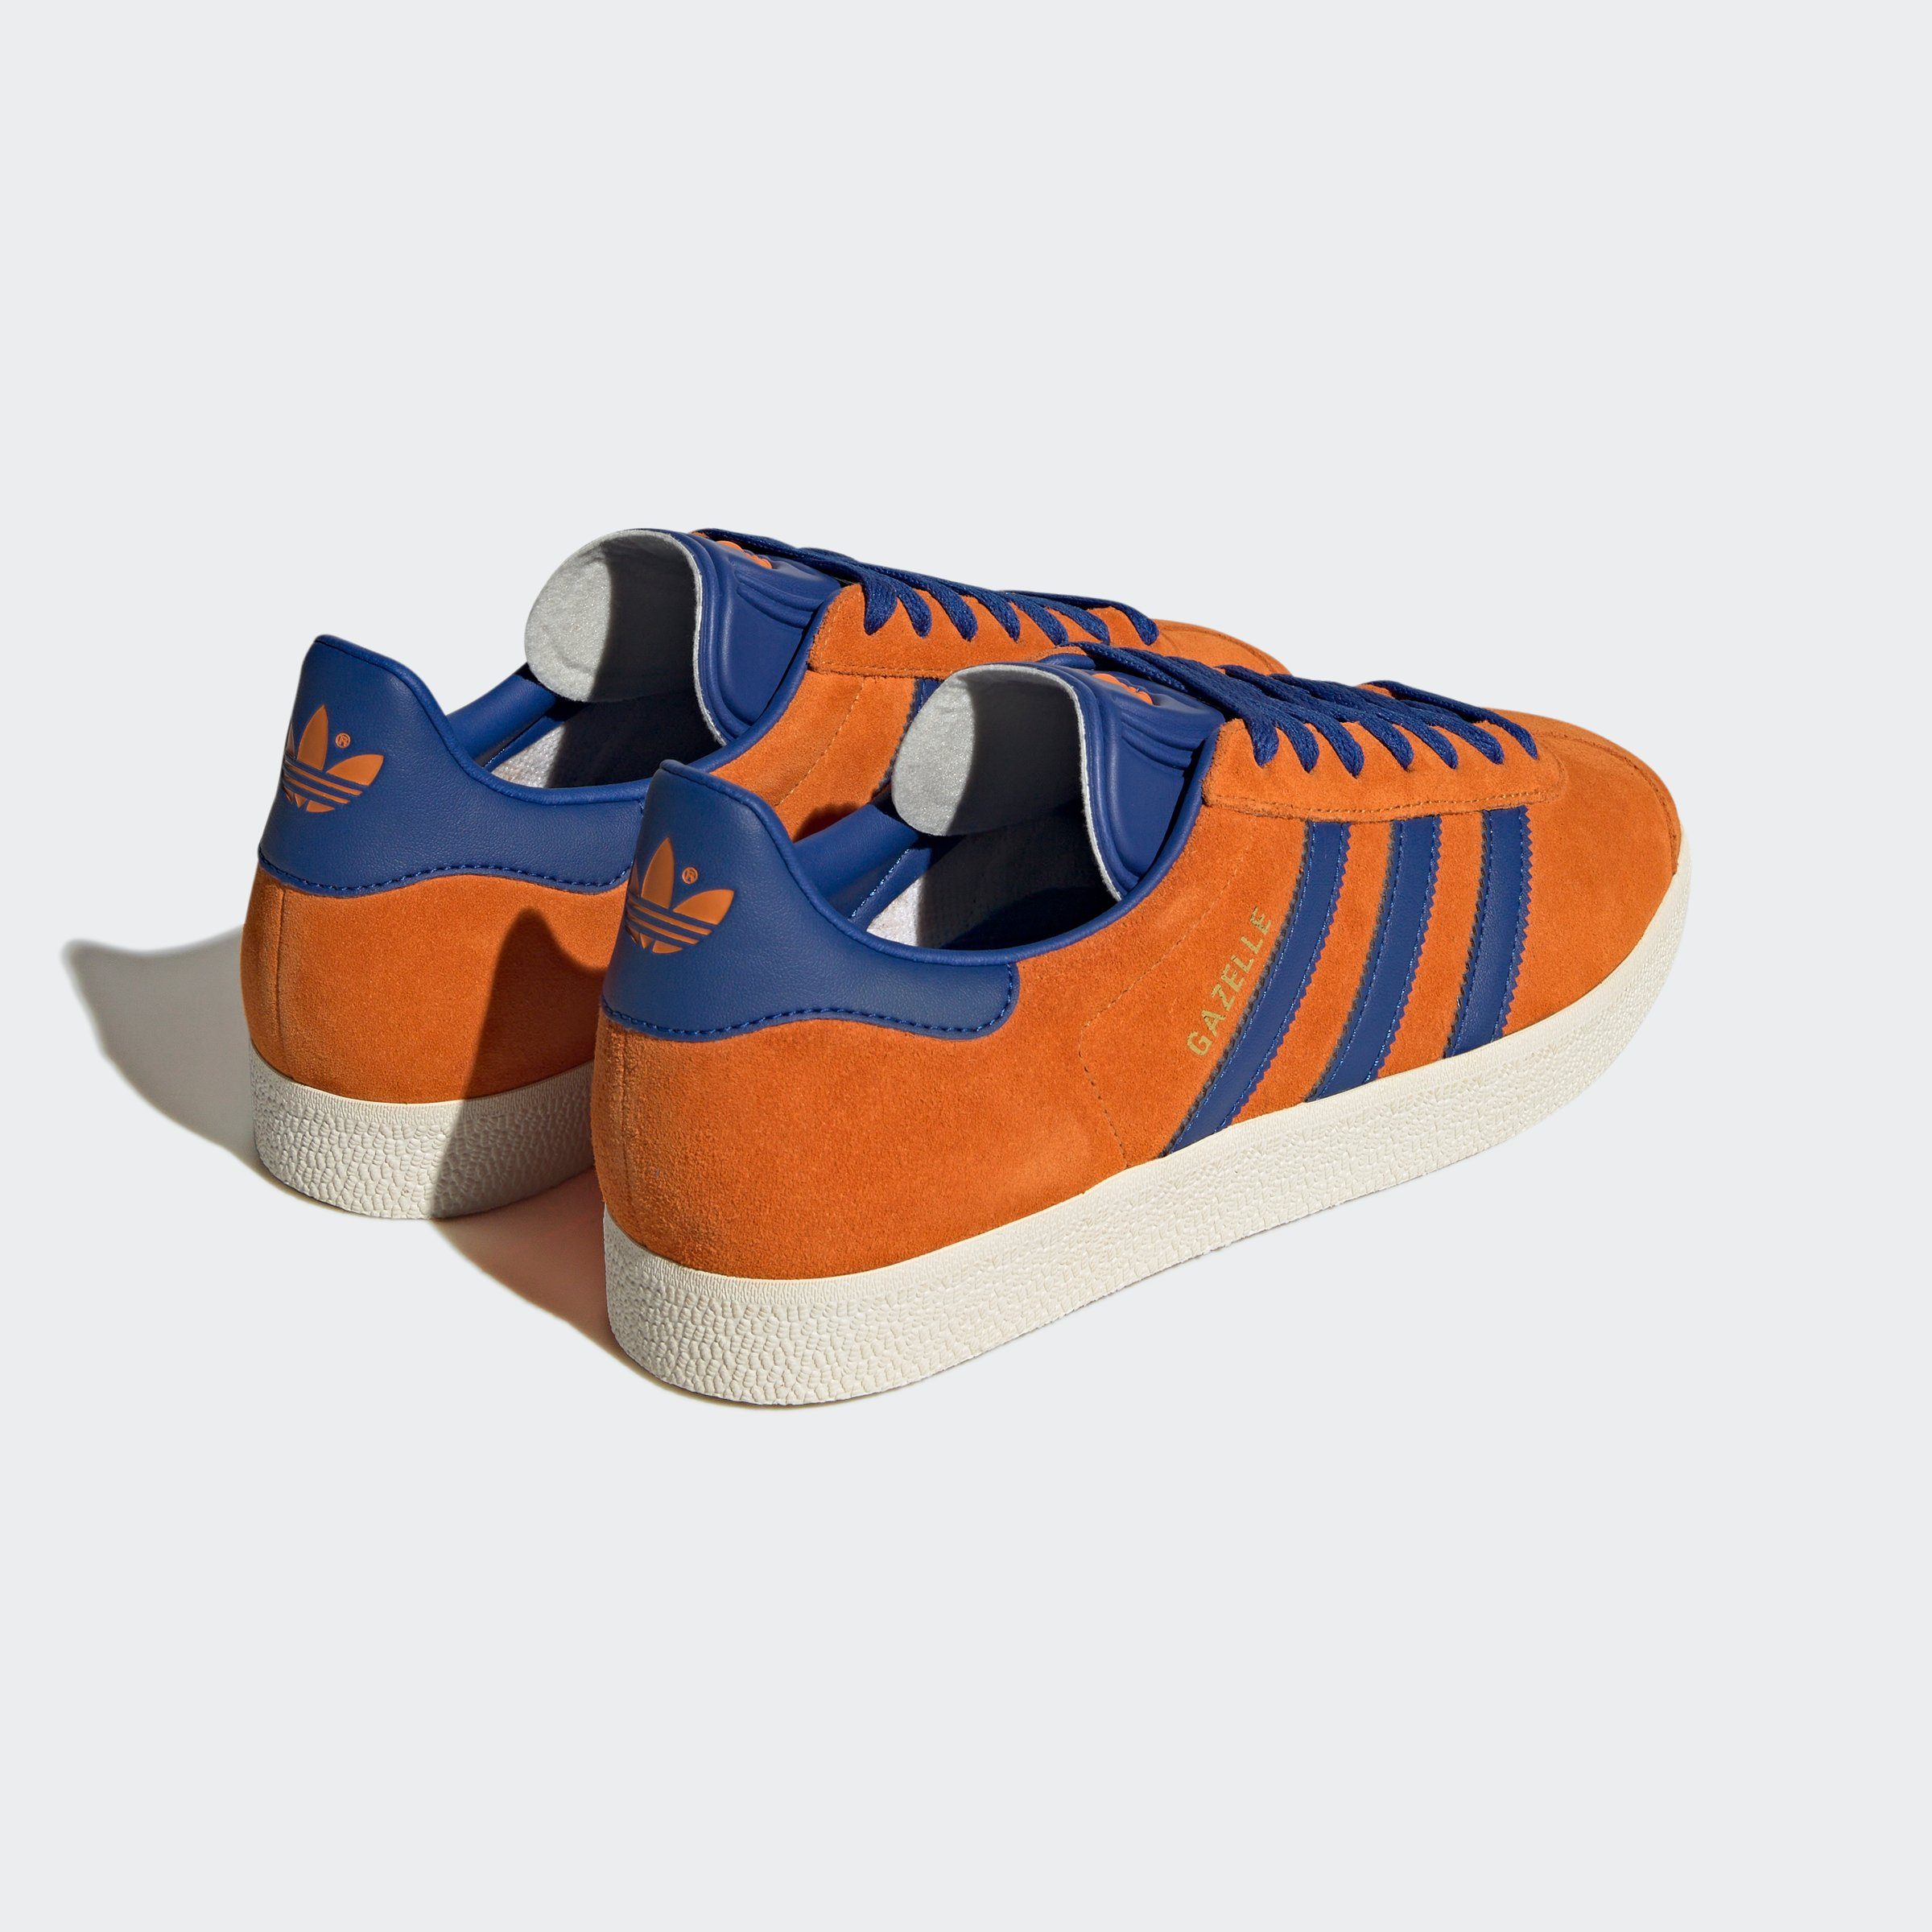 / Orange Bright Originals GAZELLE White Royal adidas Blue Sneaker / Chalk